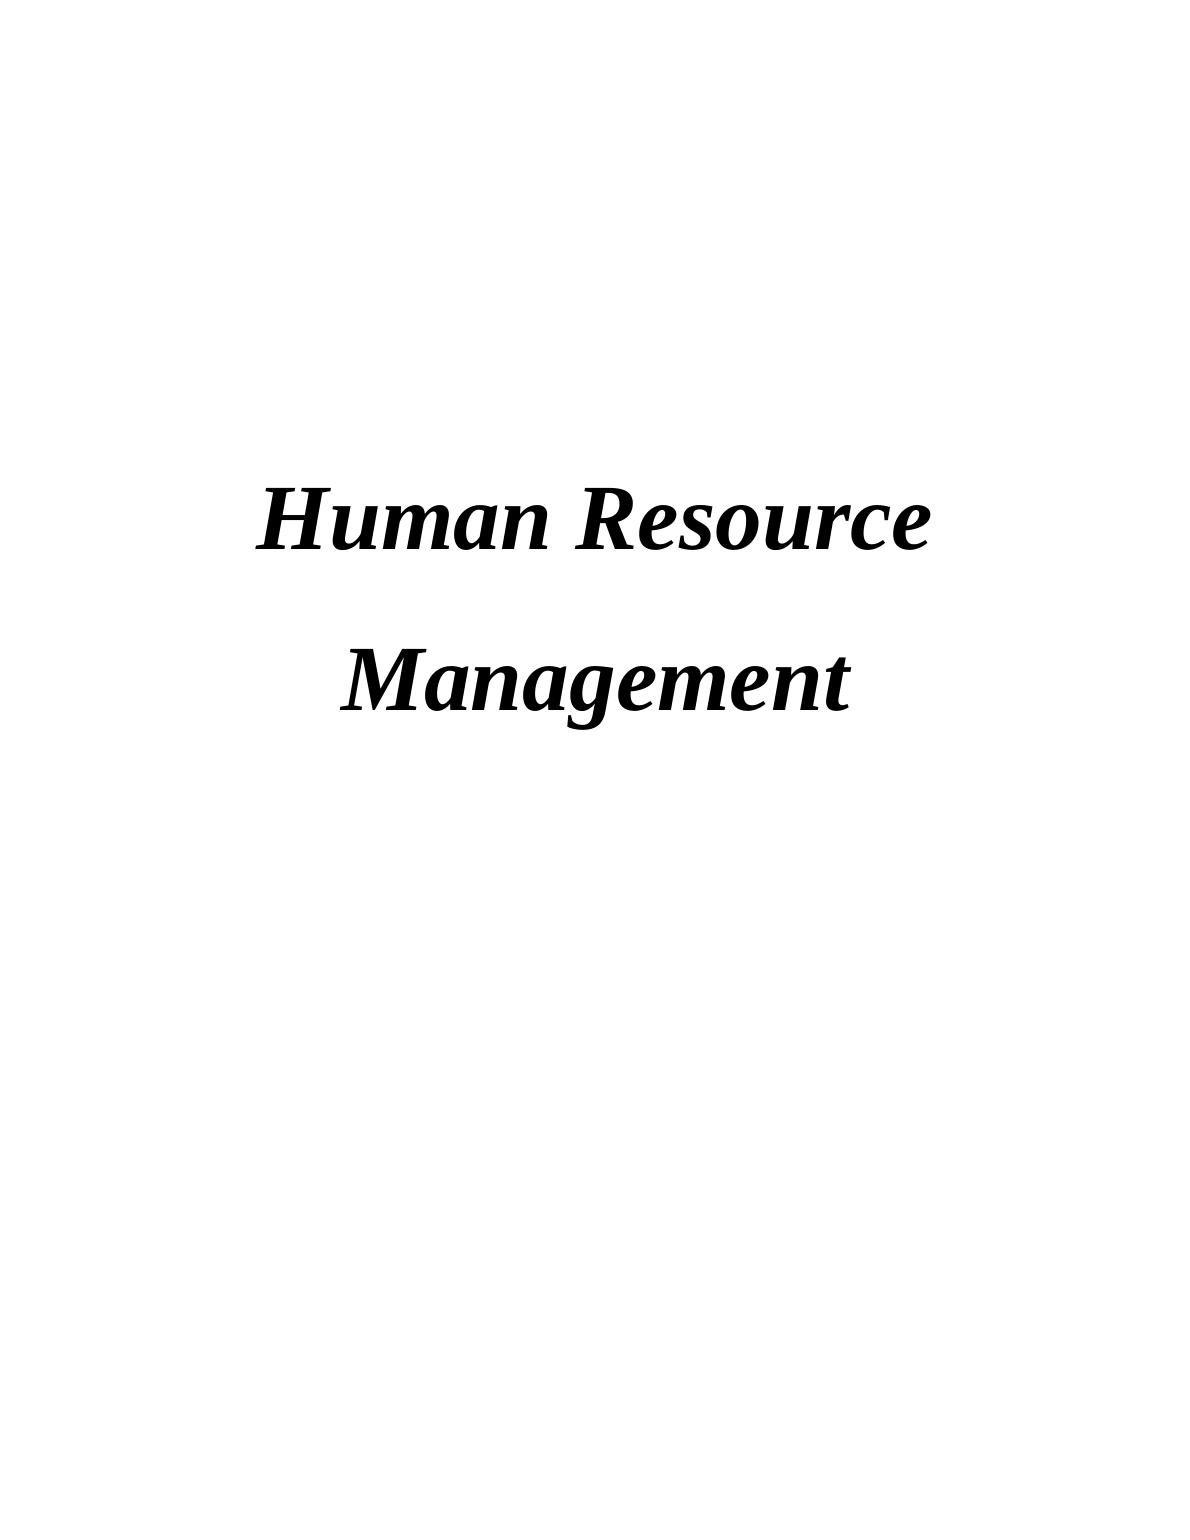 Human Resource Management Assignment : Harrods_1